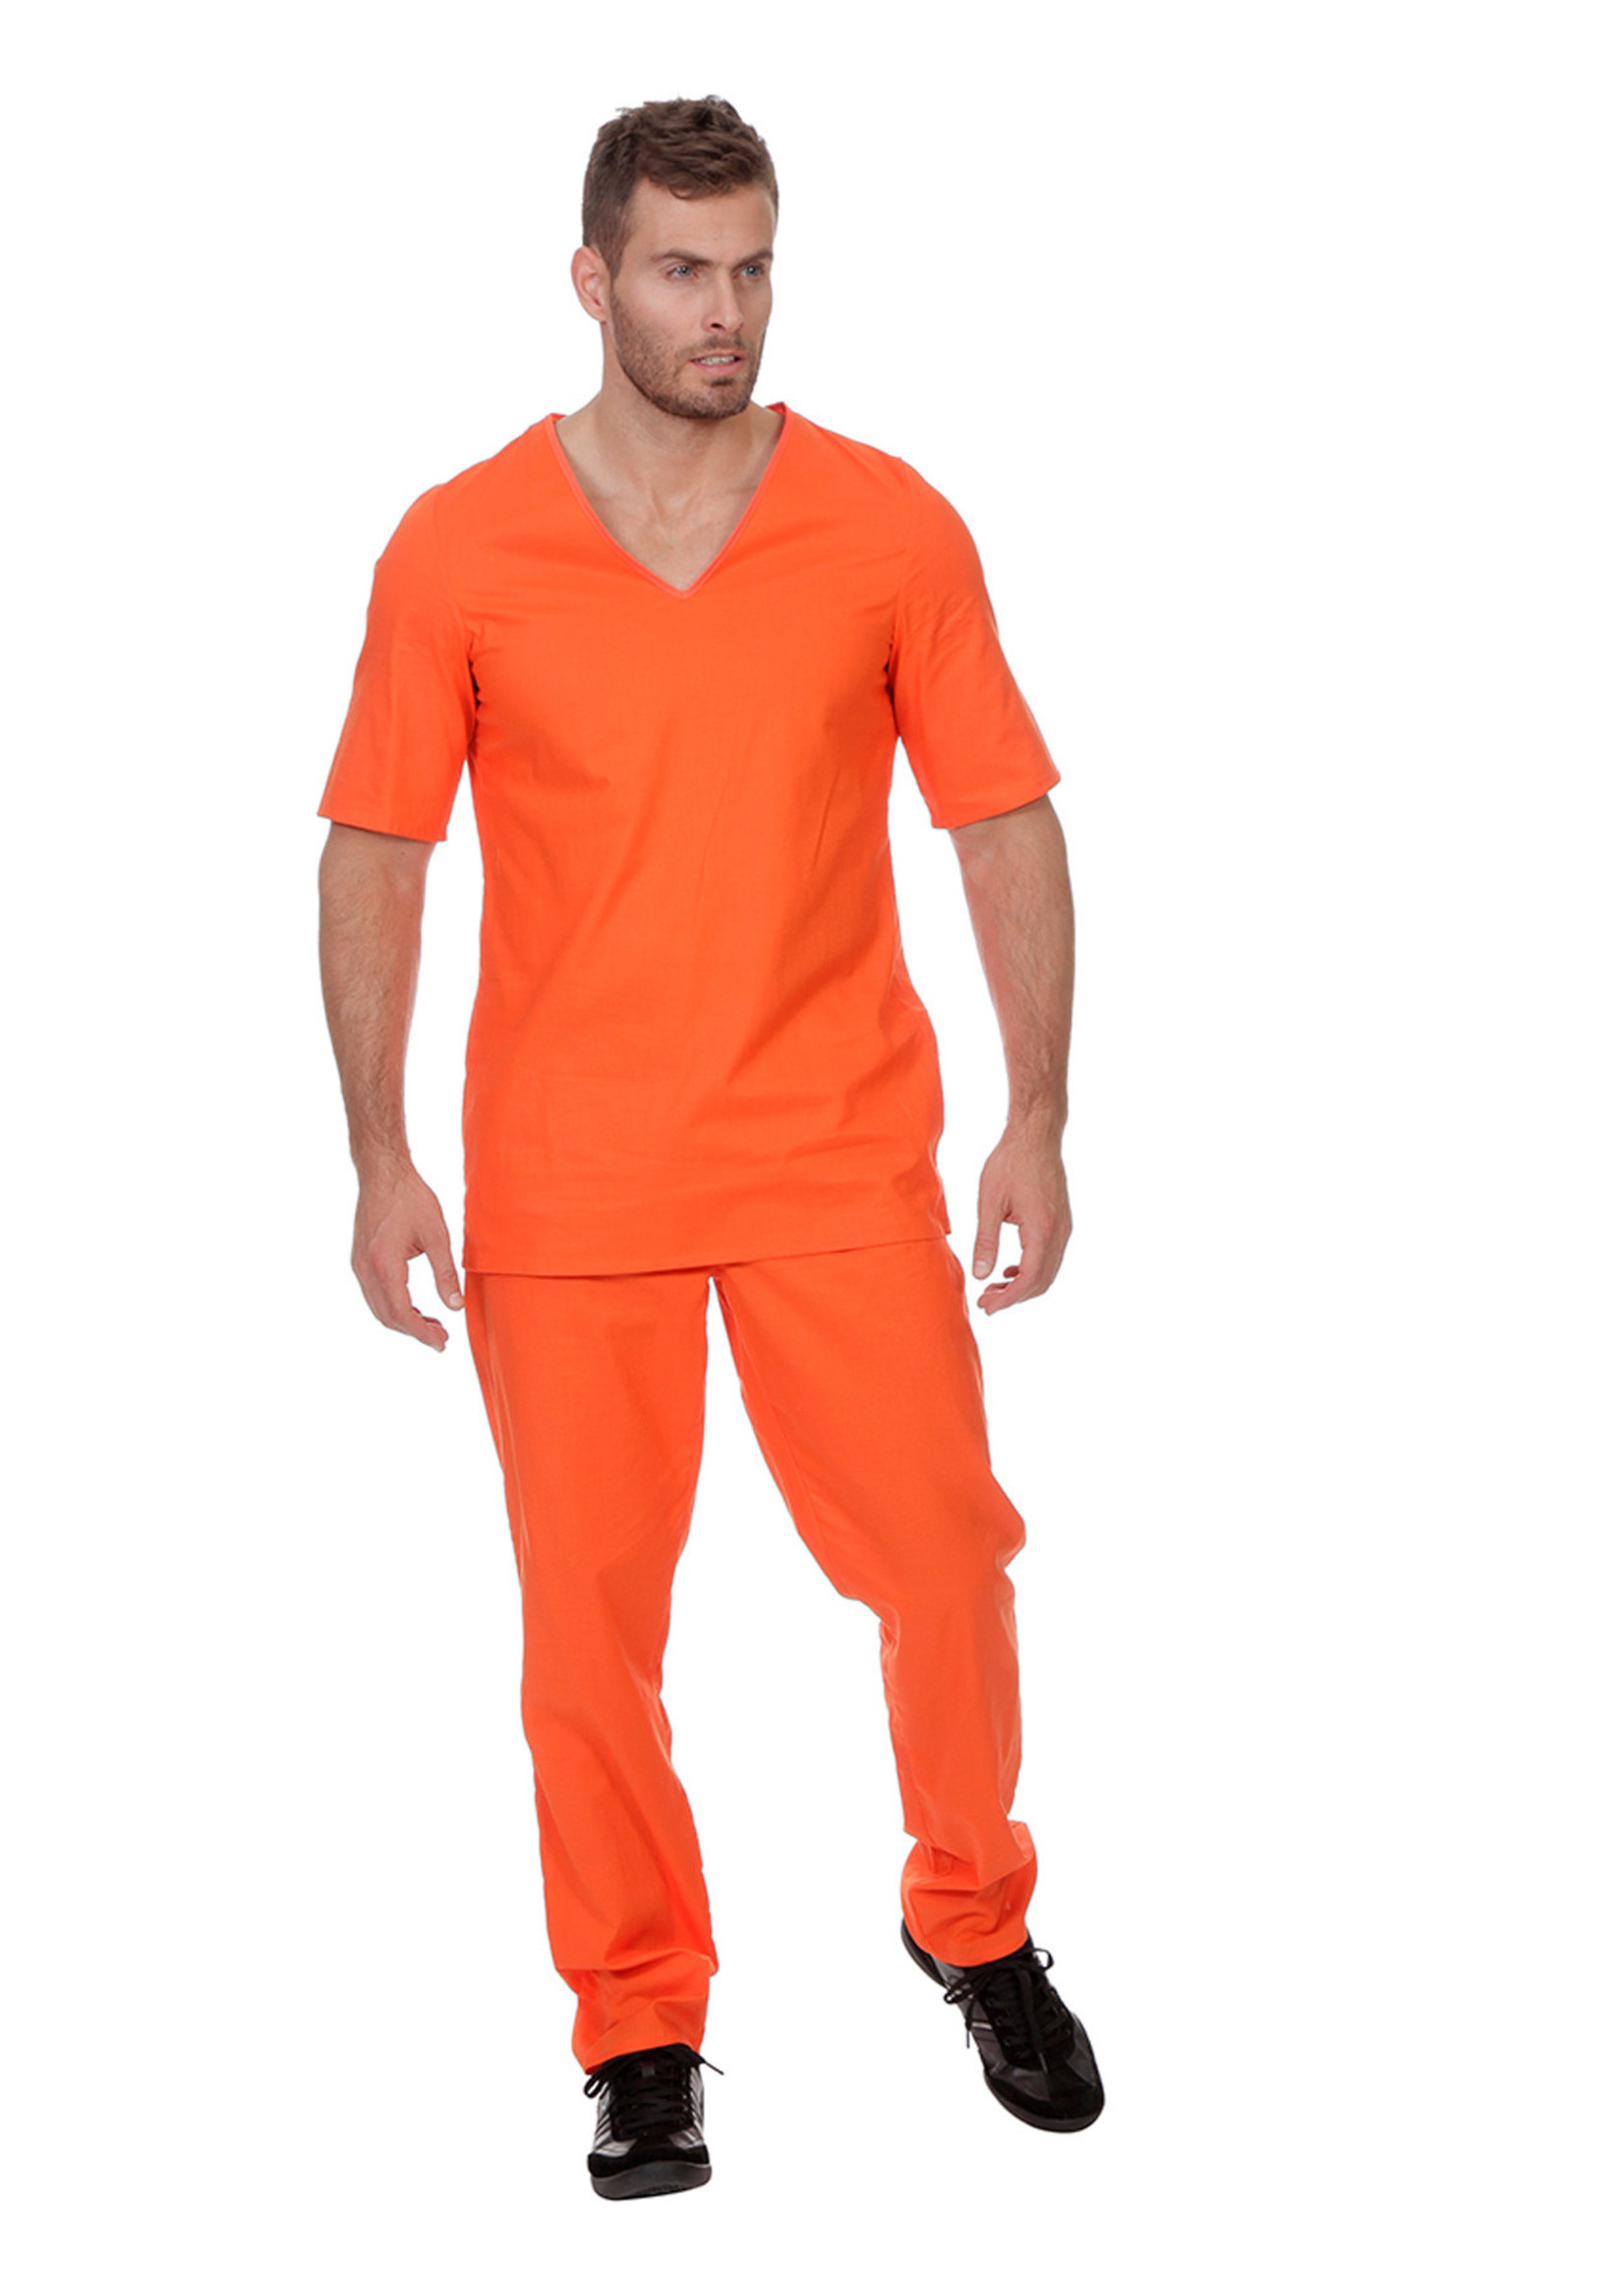 Feestkleding Breda Kostuum jailbird oranje